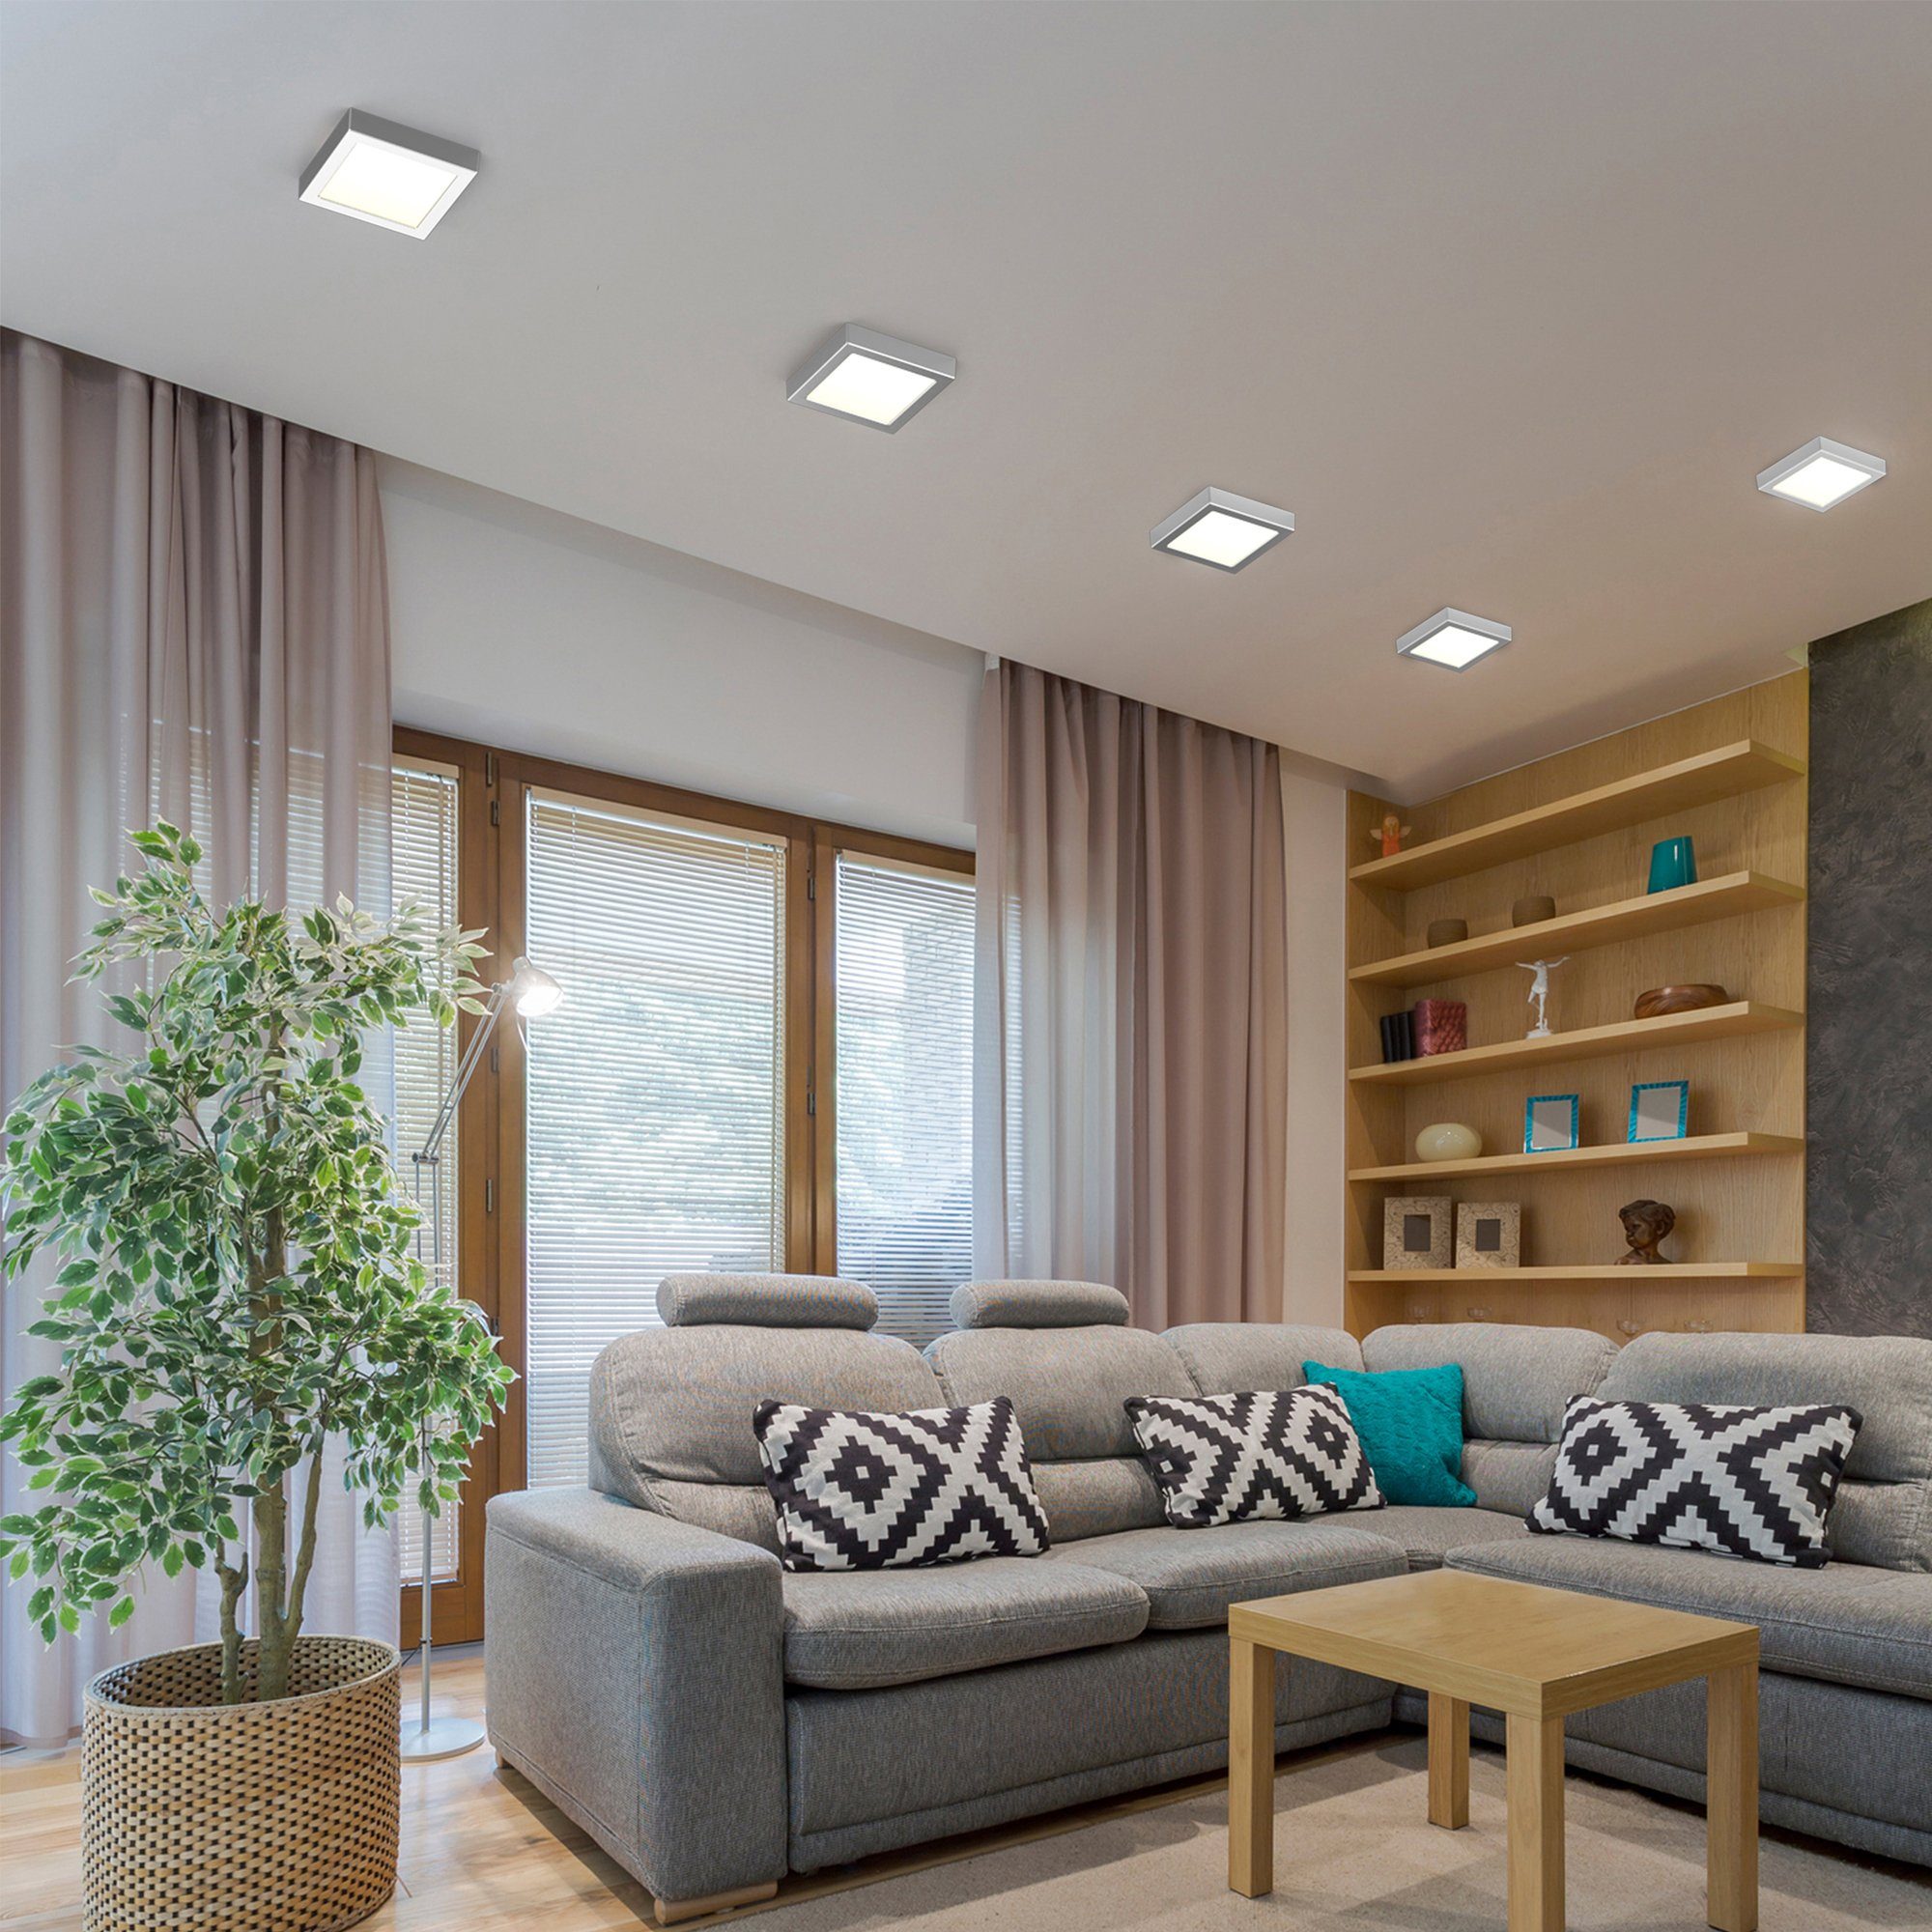 Garnet, fest Unterbauleuchte Aufbaustrahler LED Panel B.K.Licht integriert, Aufputzspot Warmweiß, LED Aufbauleuchte Lampe LED 12W